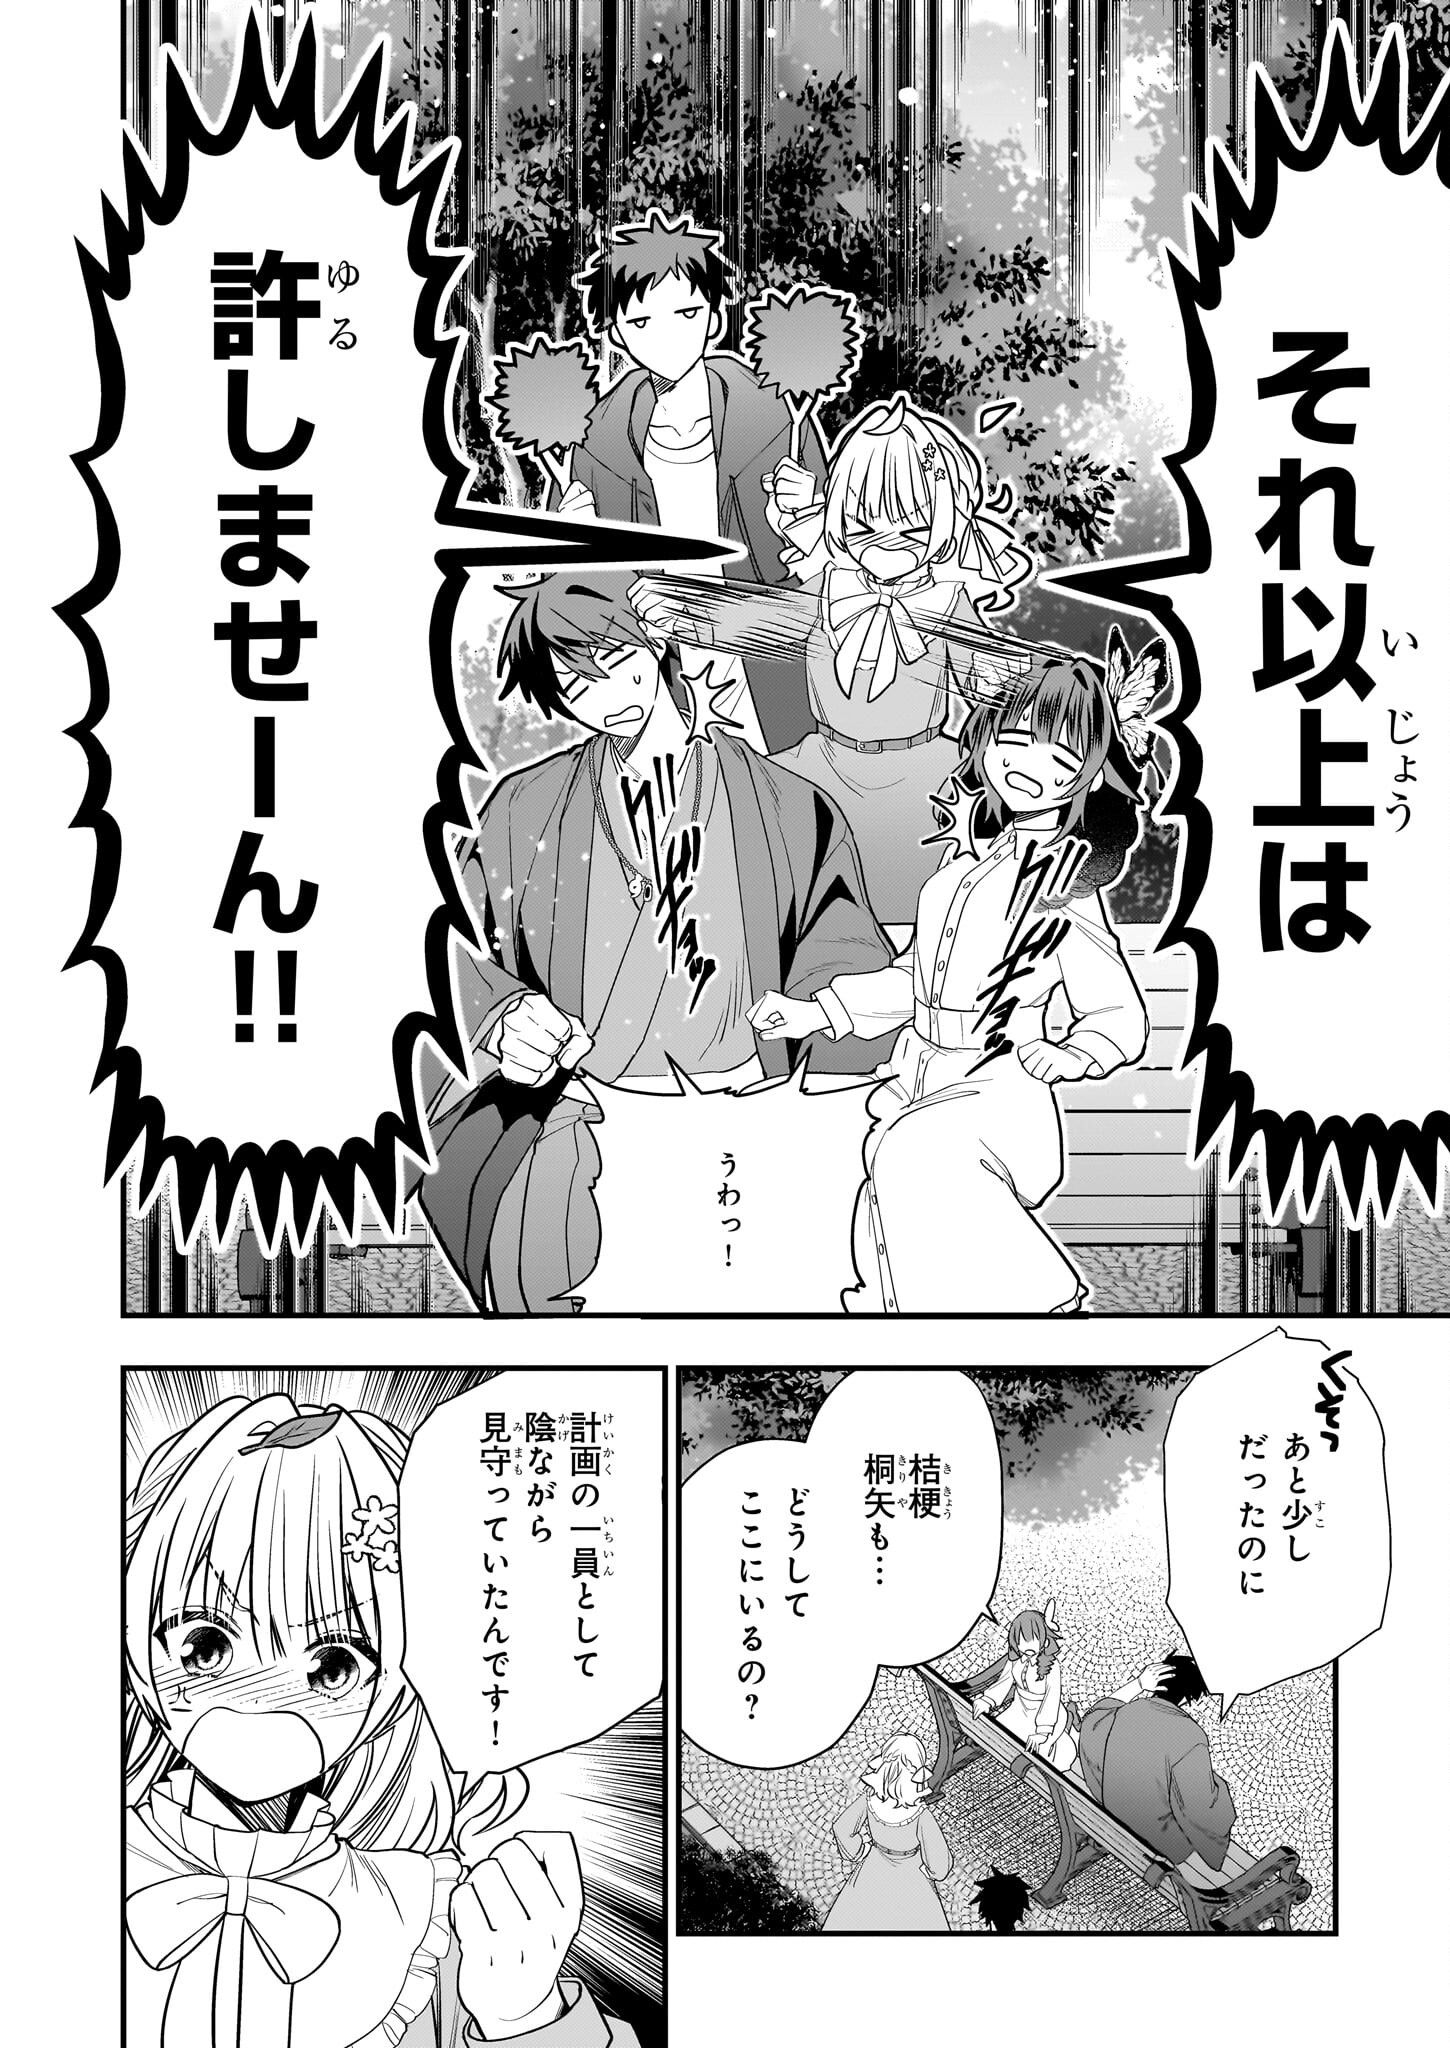 Kekkaishi no Ichirinka - Chapter 24 - Page 2